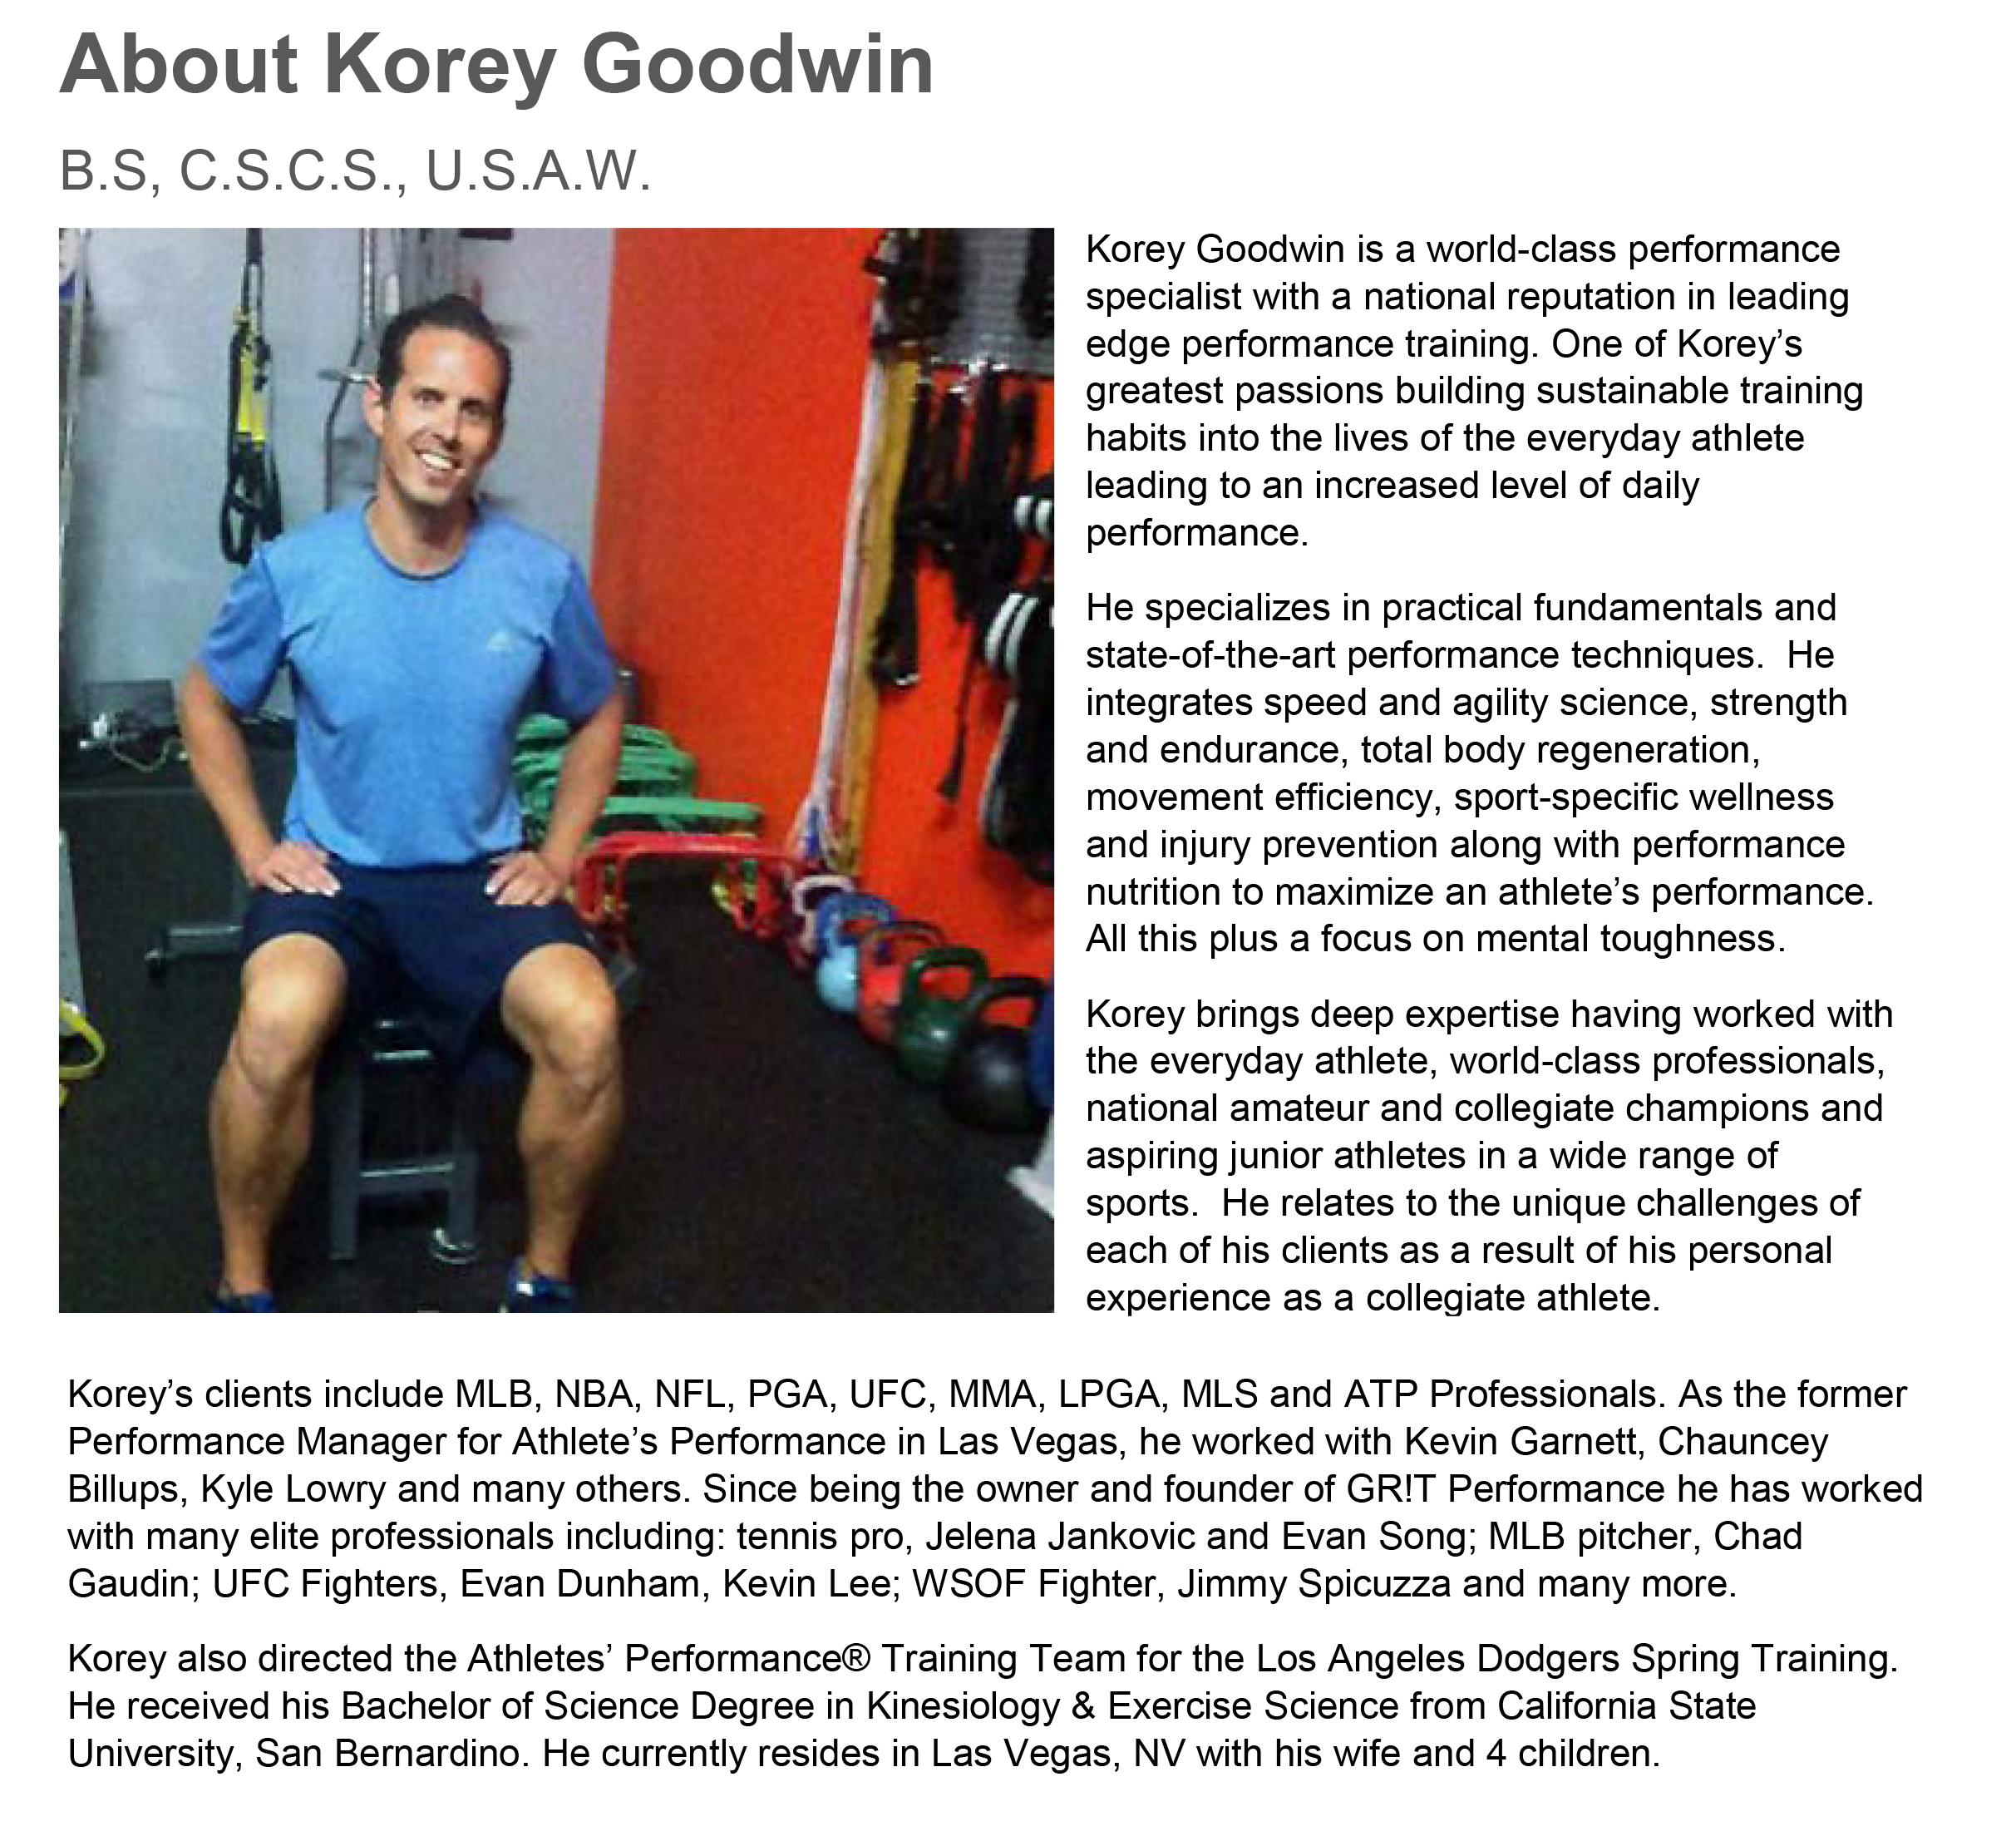 korey-goodwin-revised-bio-10_3_16-w-client-names-website-mailing